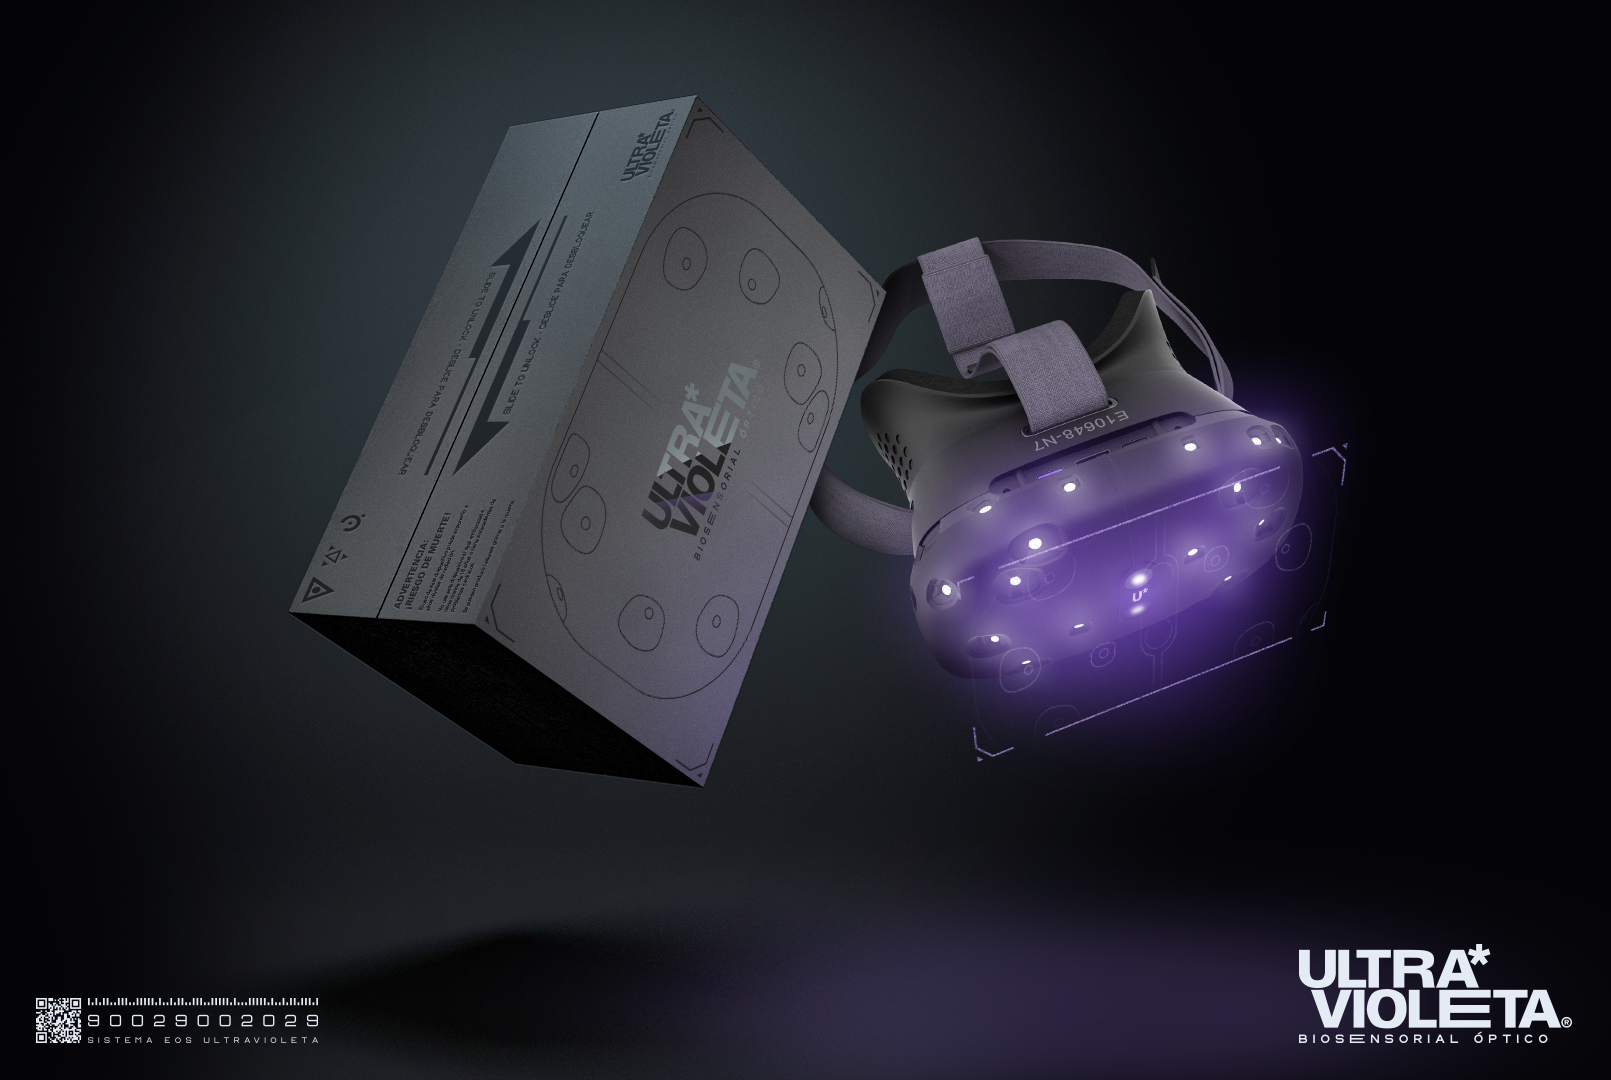 Ultravioleta - VR Headset